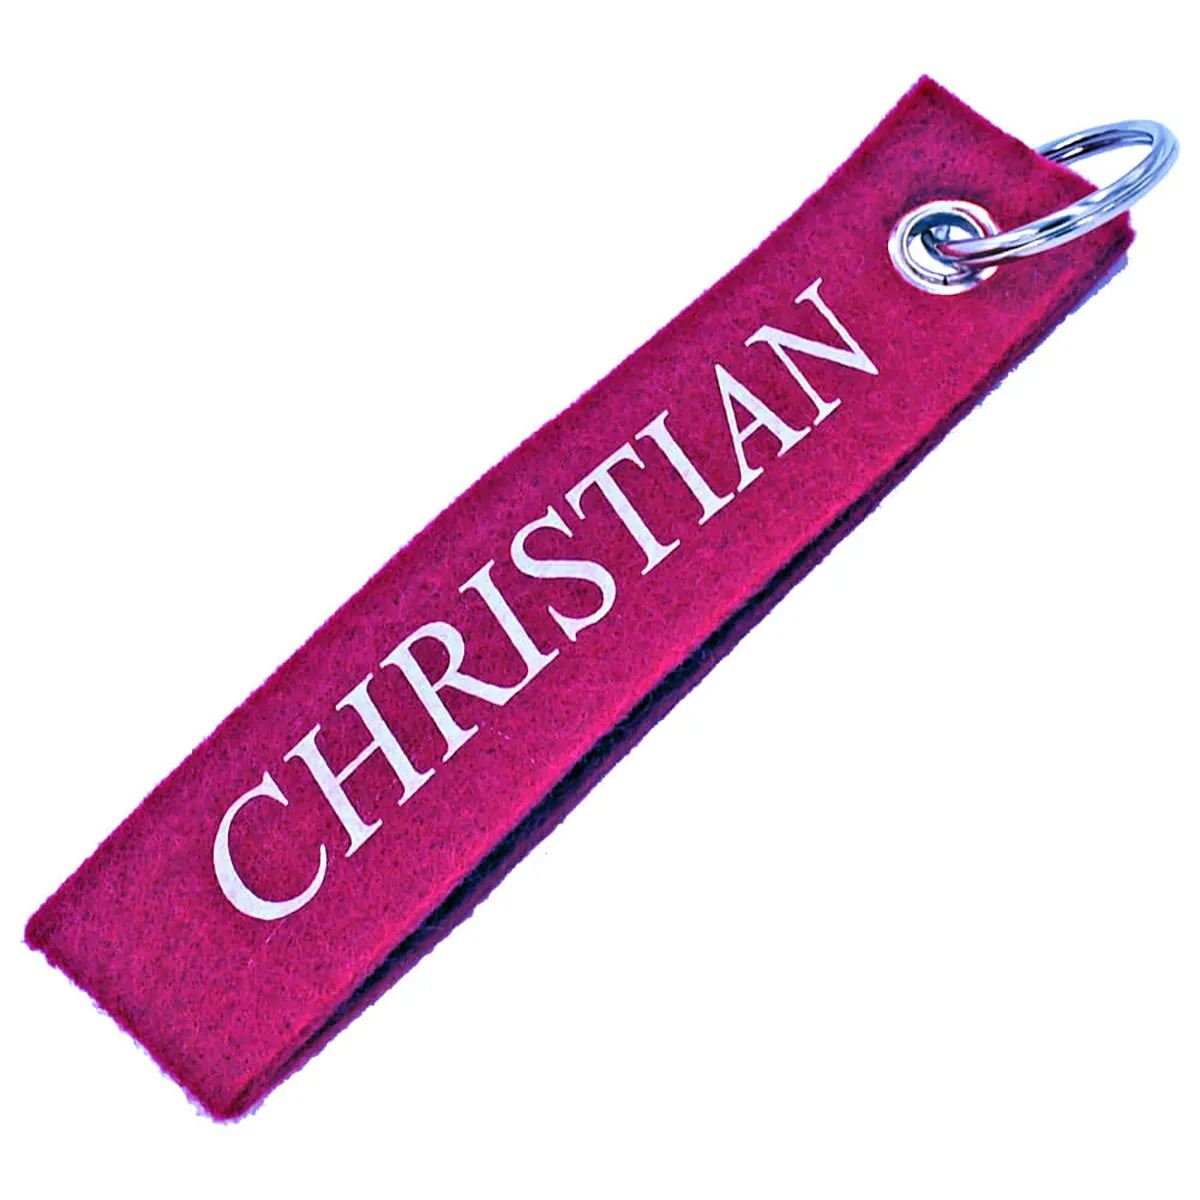 Schlüsselanhänger aus Filz bedruckt mit Christian in lila